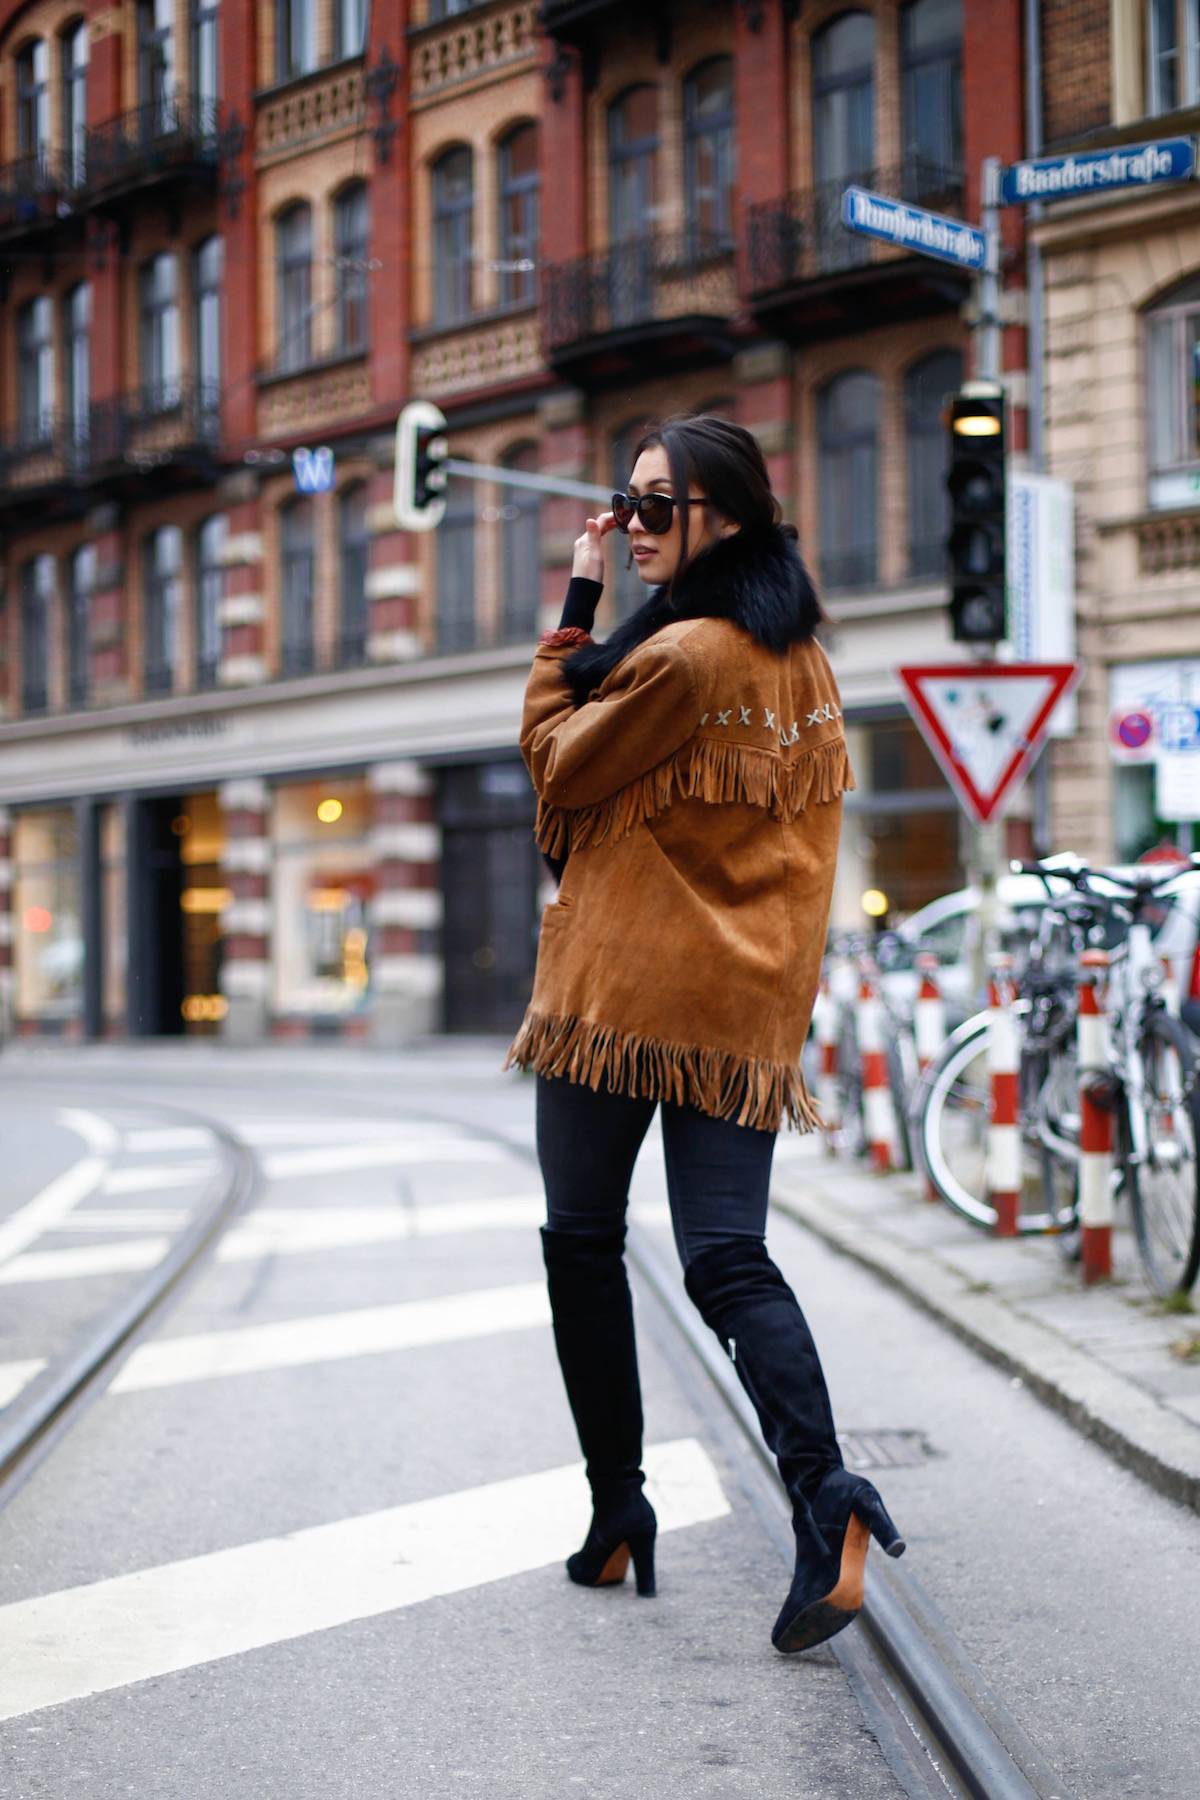 Fringed Jacket - Suede Leather - Vintage - Luxury - Overknees - Fur - Calvin Klein Sunnies - Fashionista - German Fashionblogger - Ootd - Streetstyle Munich - München Personal Style Blog - Isartor - Stilmix